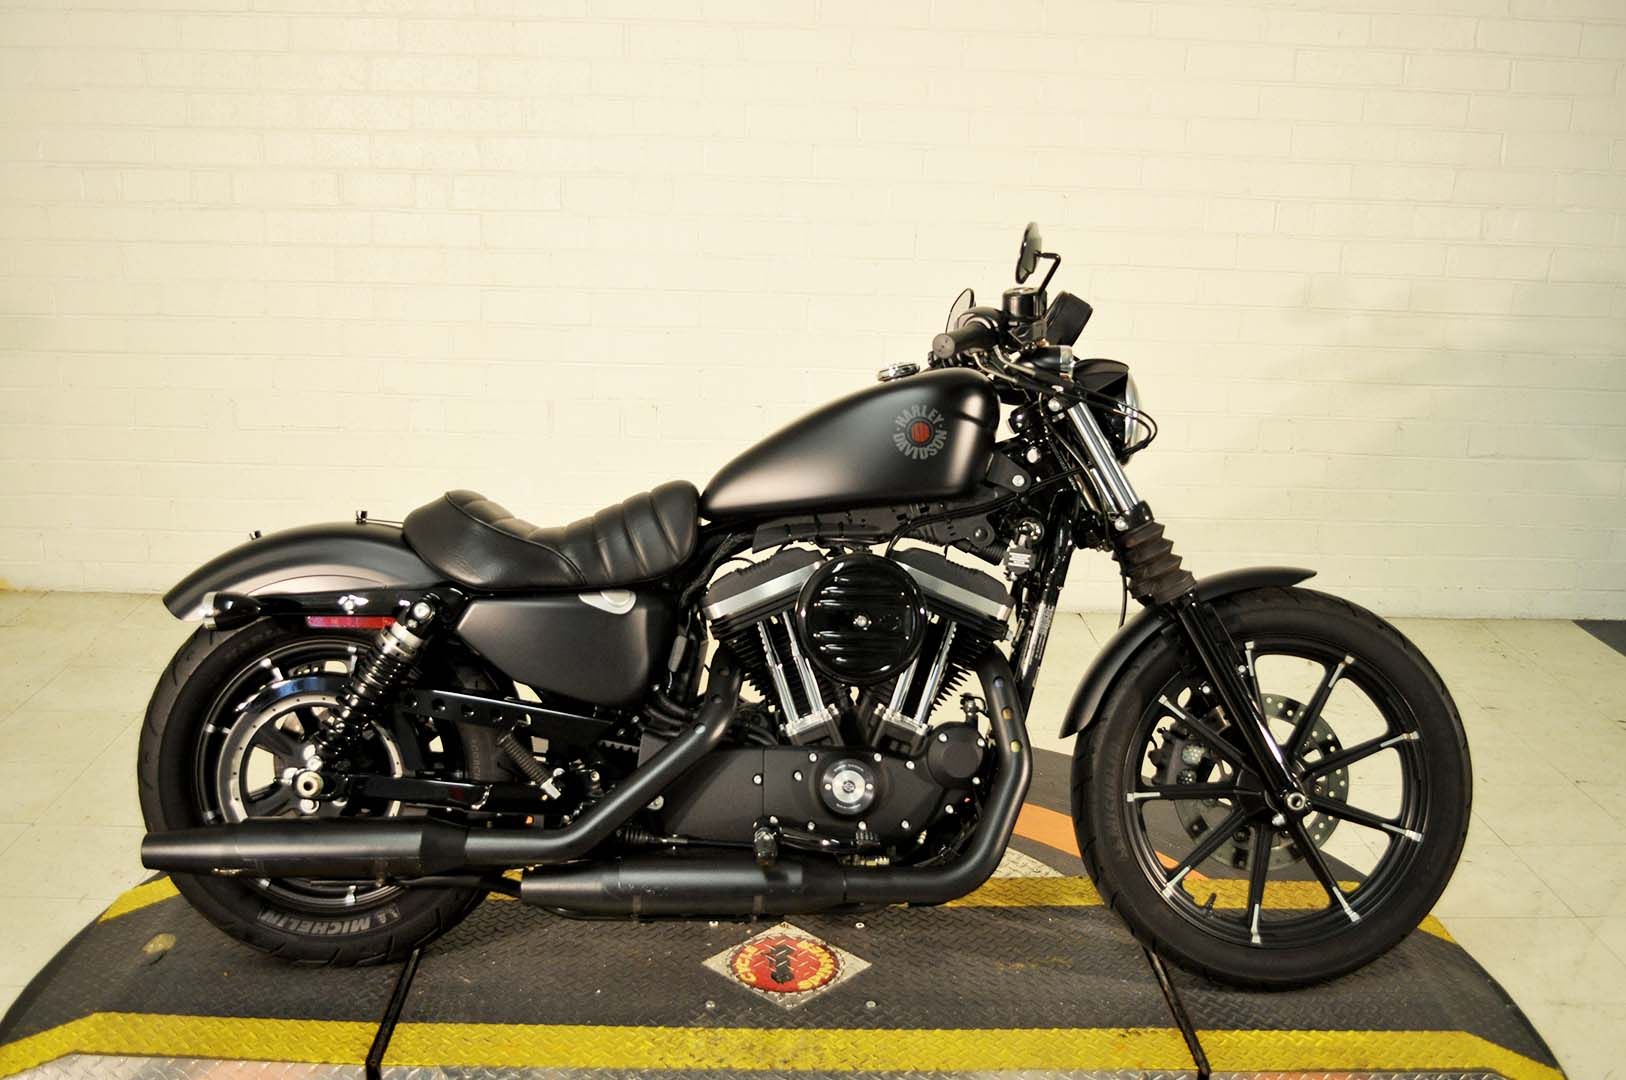 2020 Harley-Davidson Iron 883™ in Winston Salem, North Carolina - Photo 1